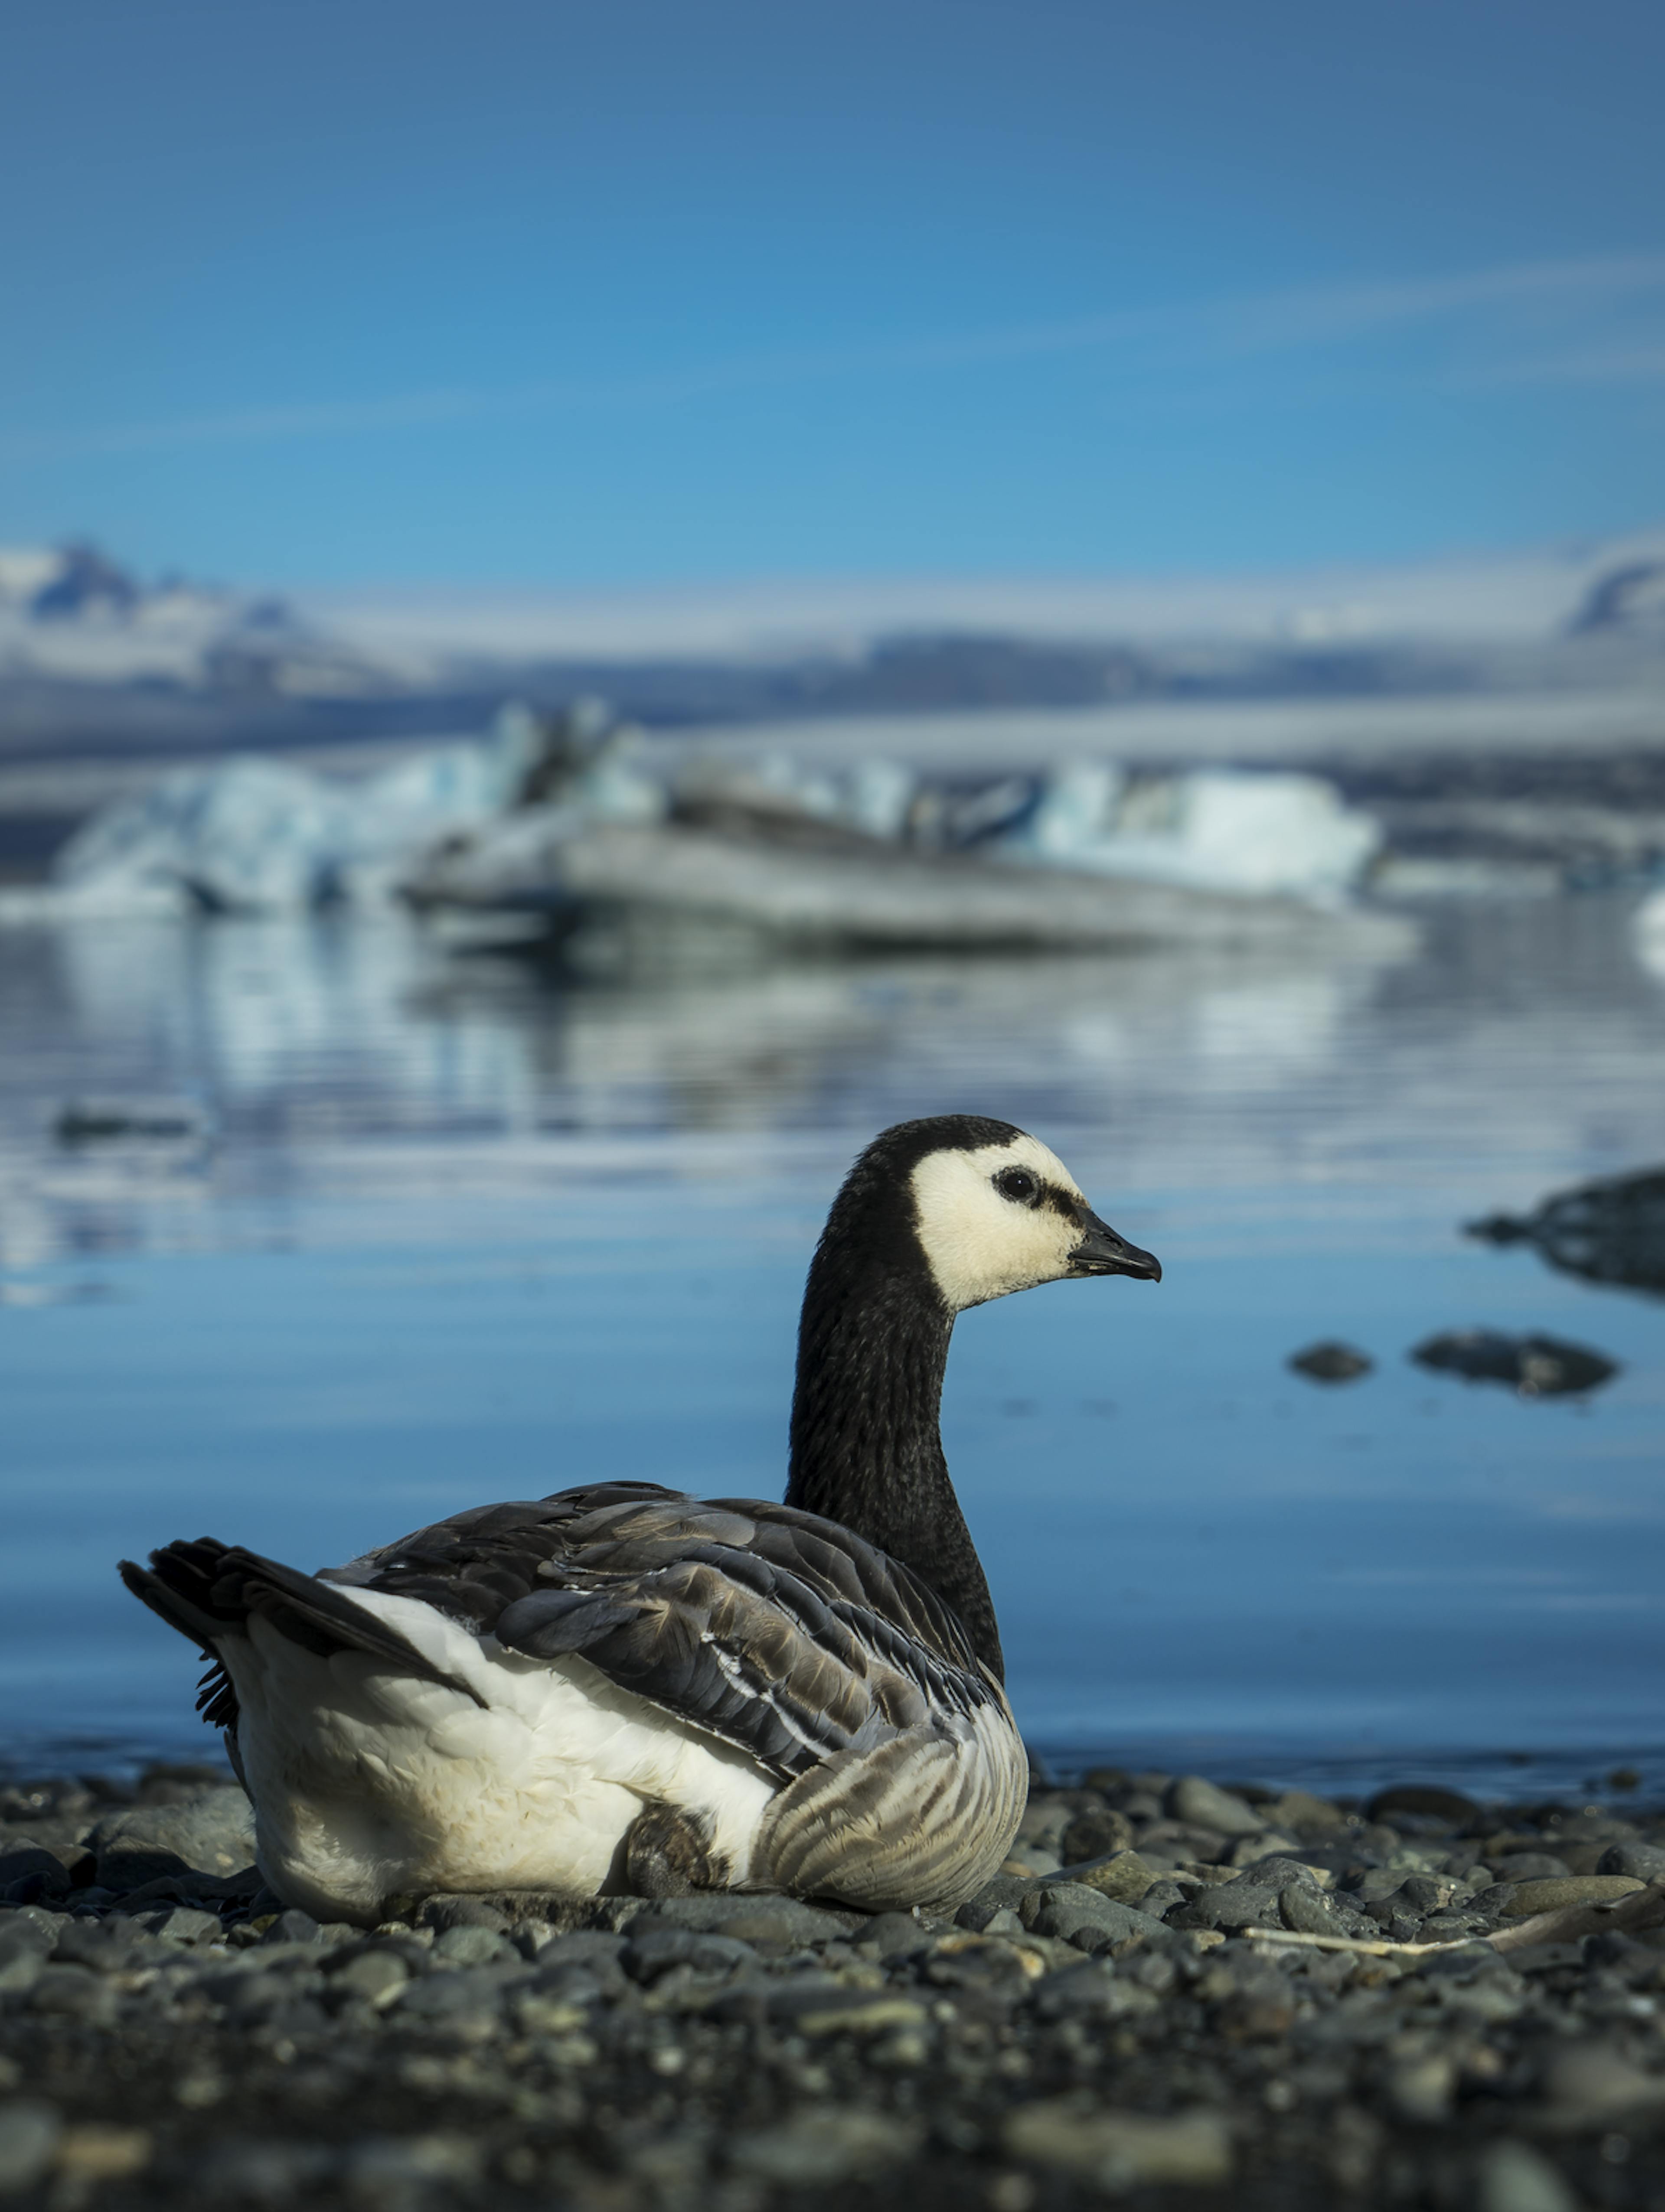 The Icelandic barnacle goose